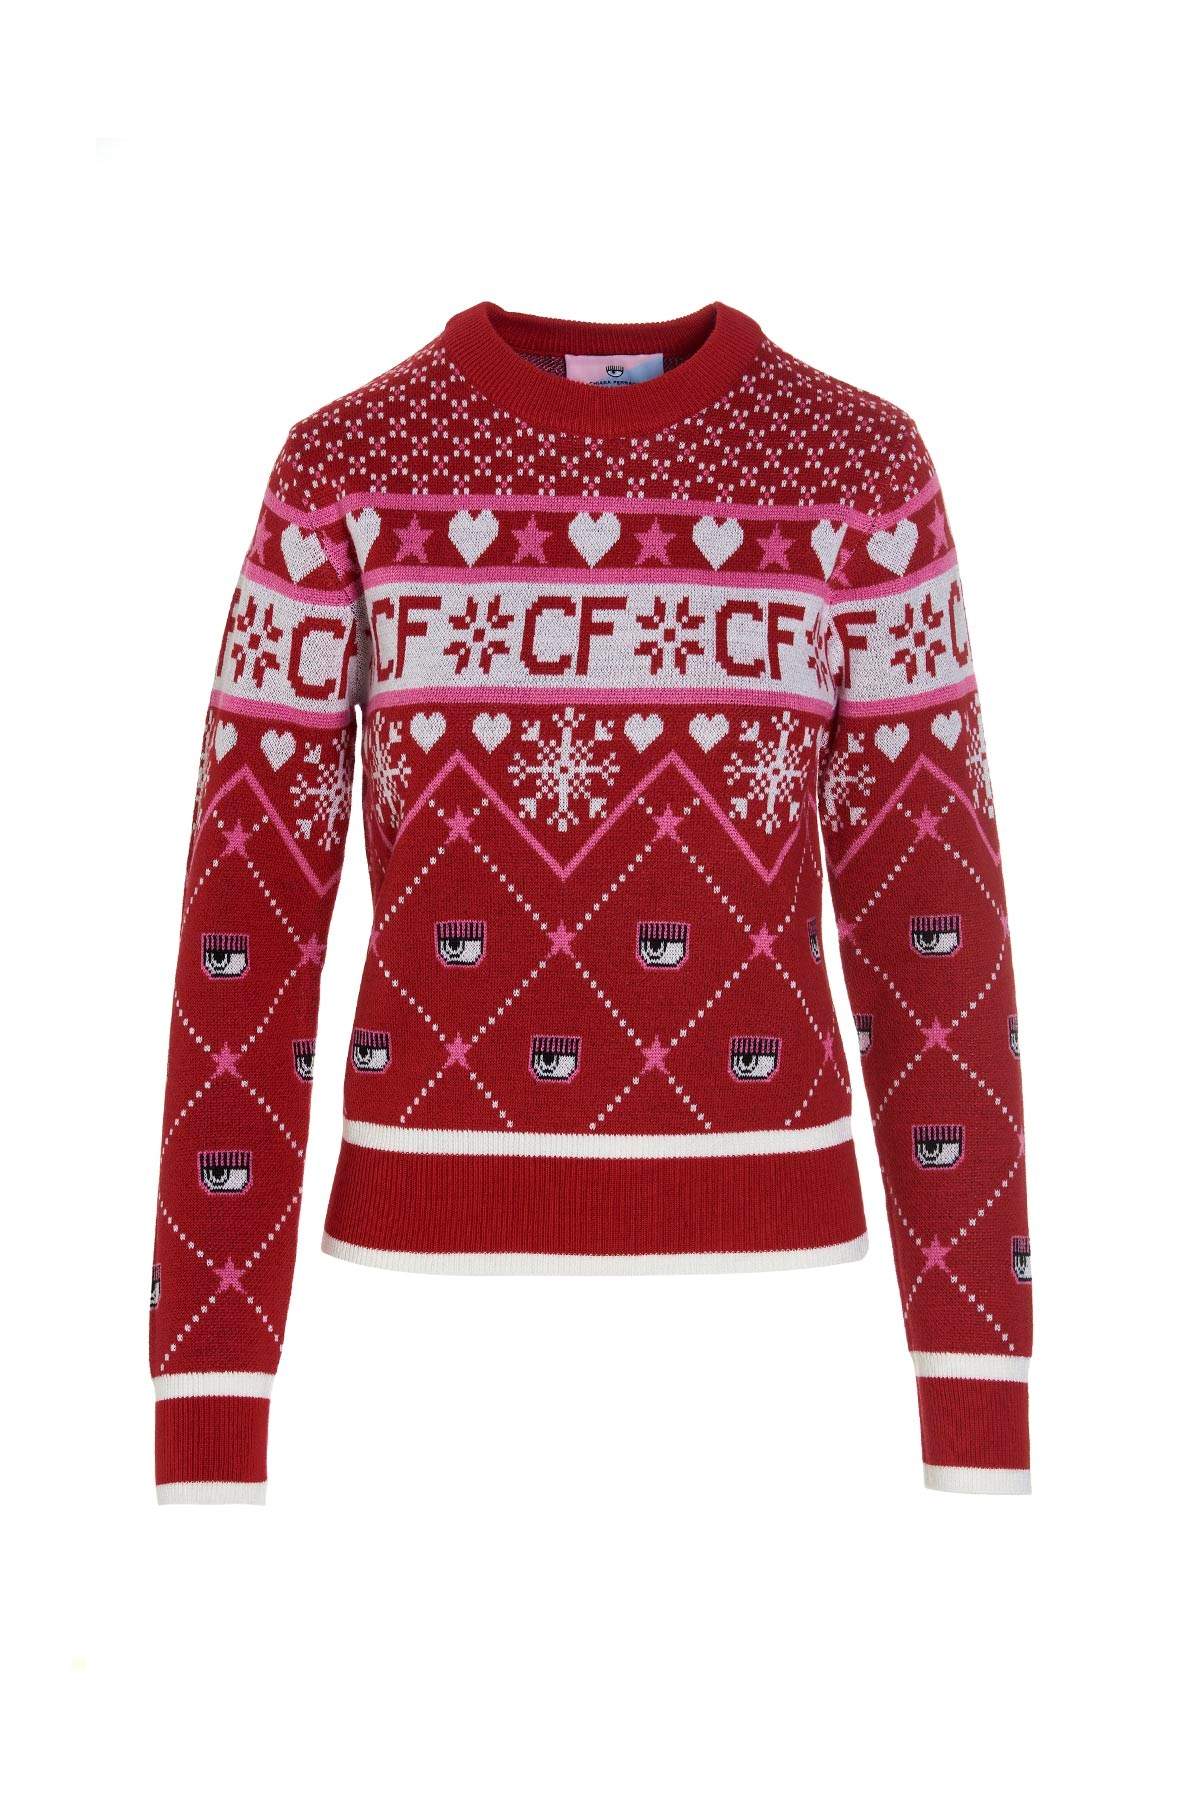 CHIARA FERRAGNI BRAND 'Holidays’ Sweater